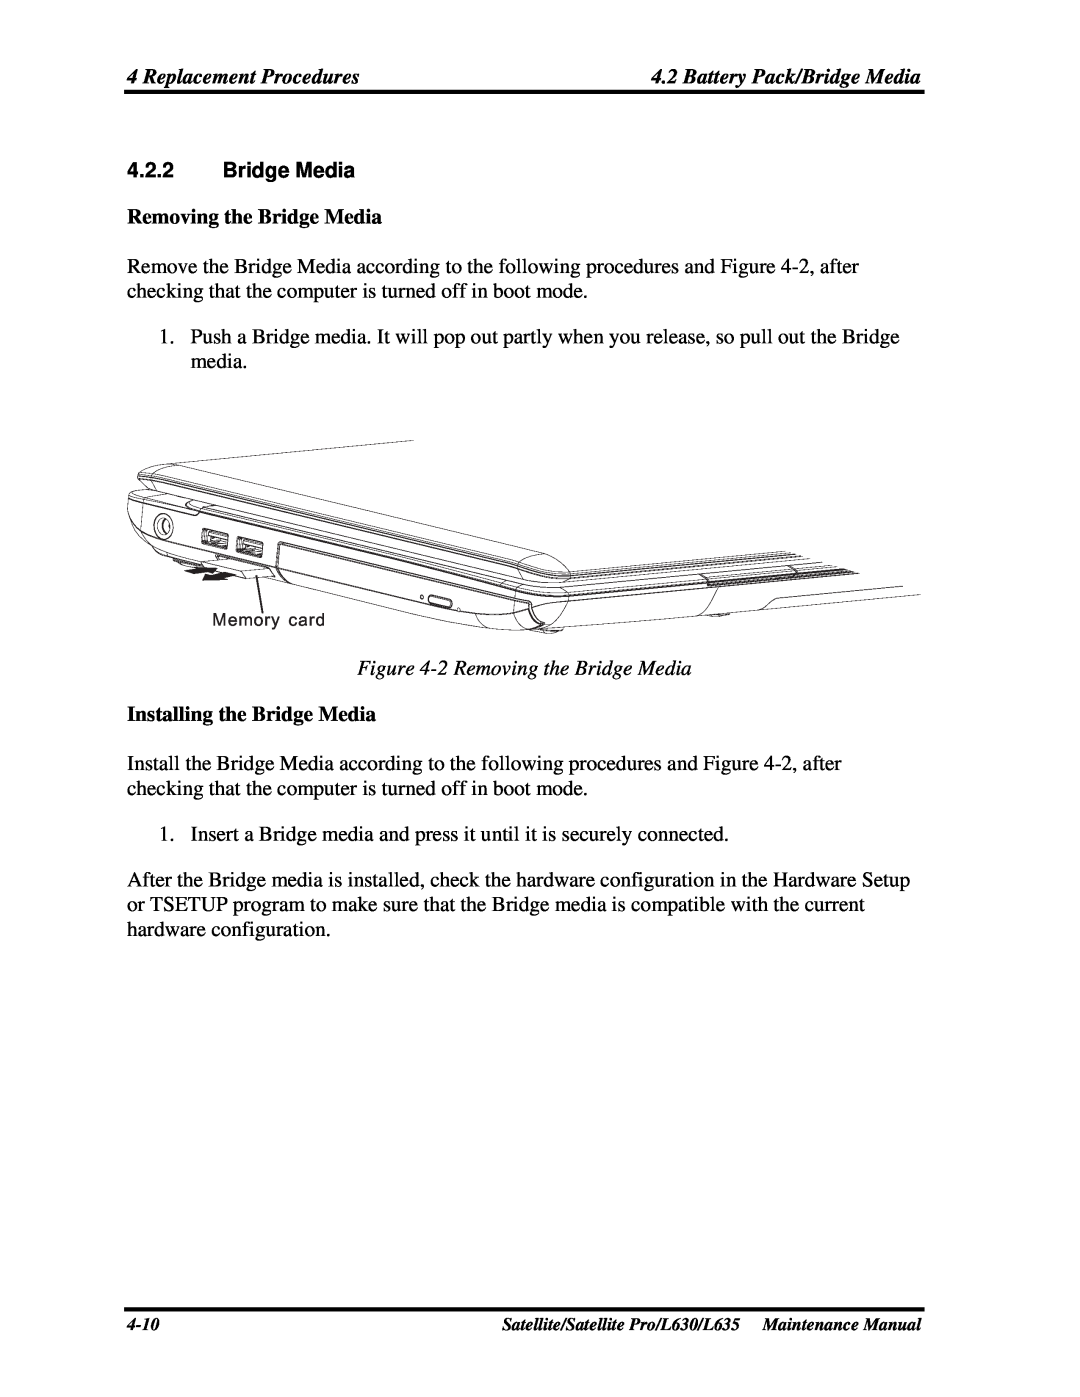 Toshiba L635, L630 manual Removing the Bridge Media, Installing the Bridge Media 